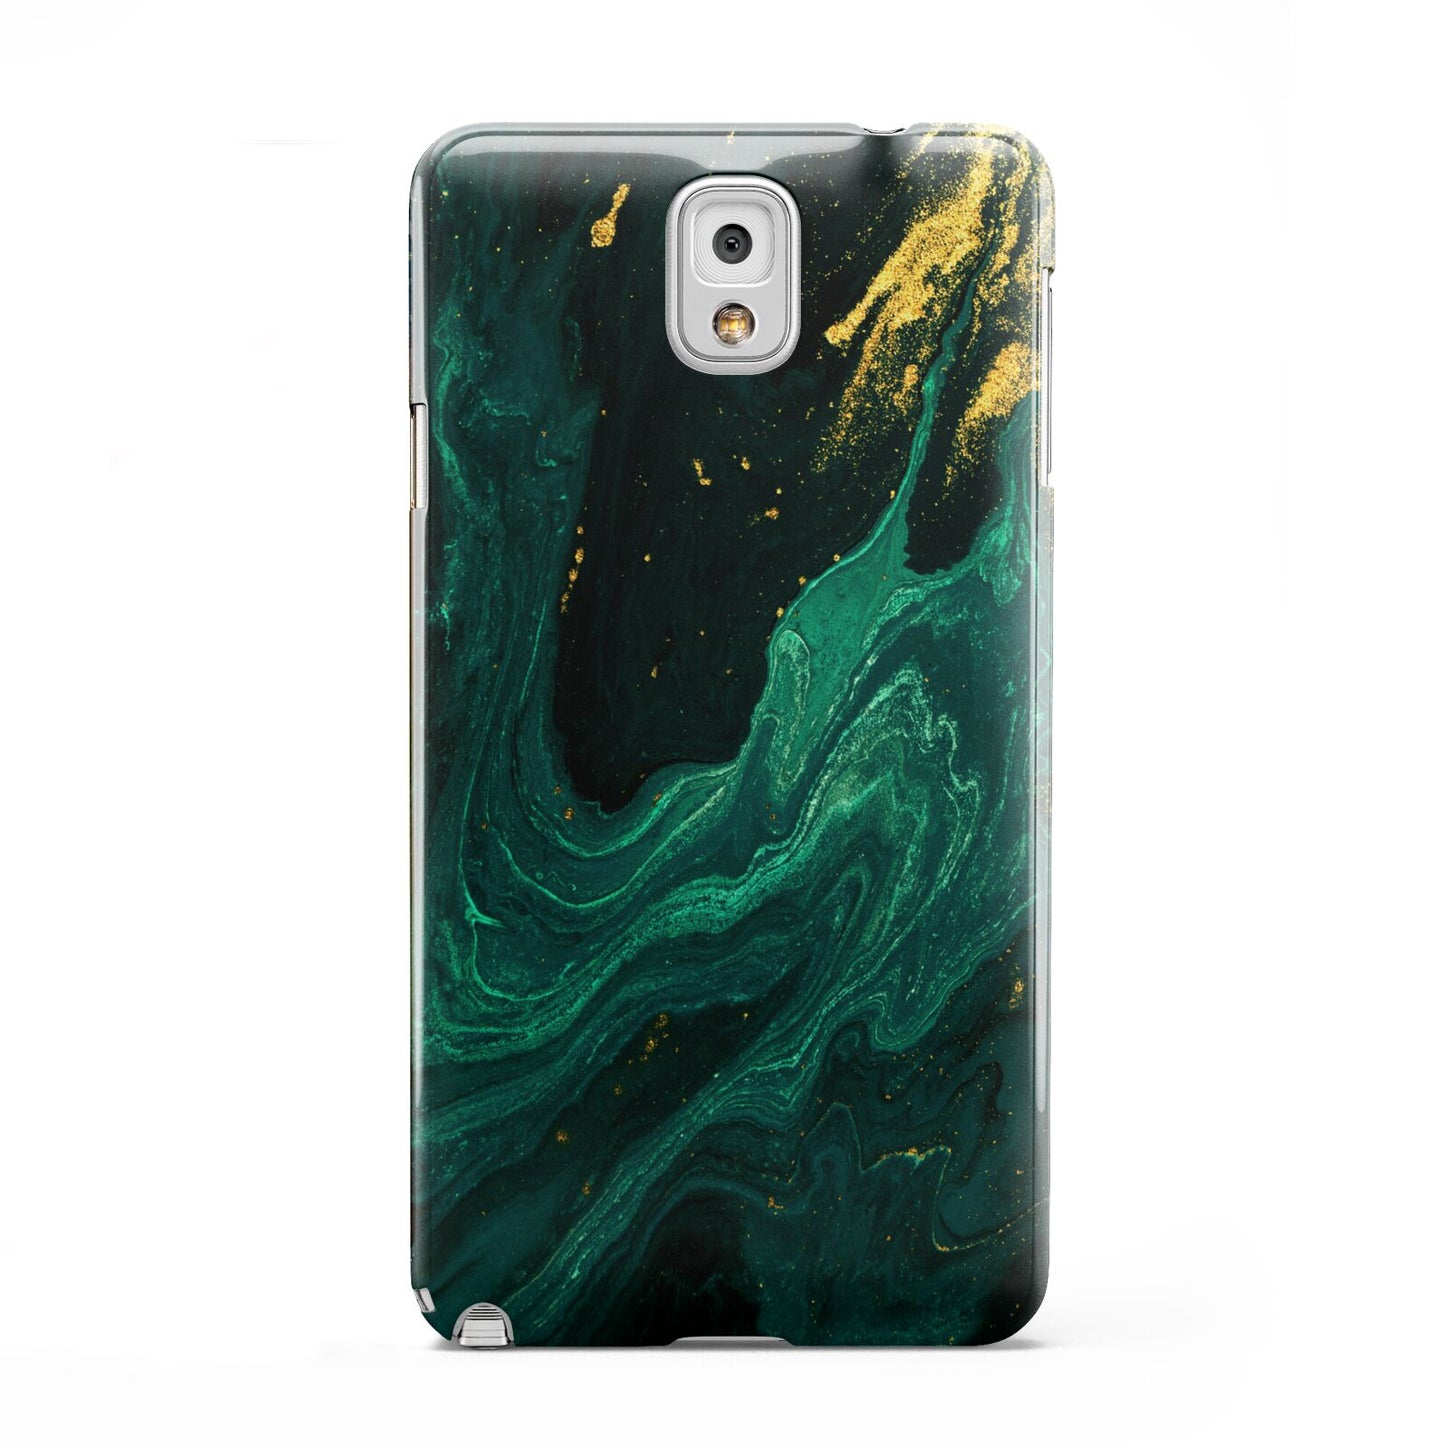 Emerald Green Samsung Galaxy Note 3 Case